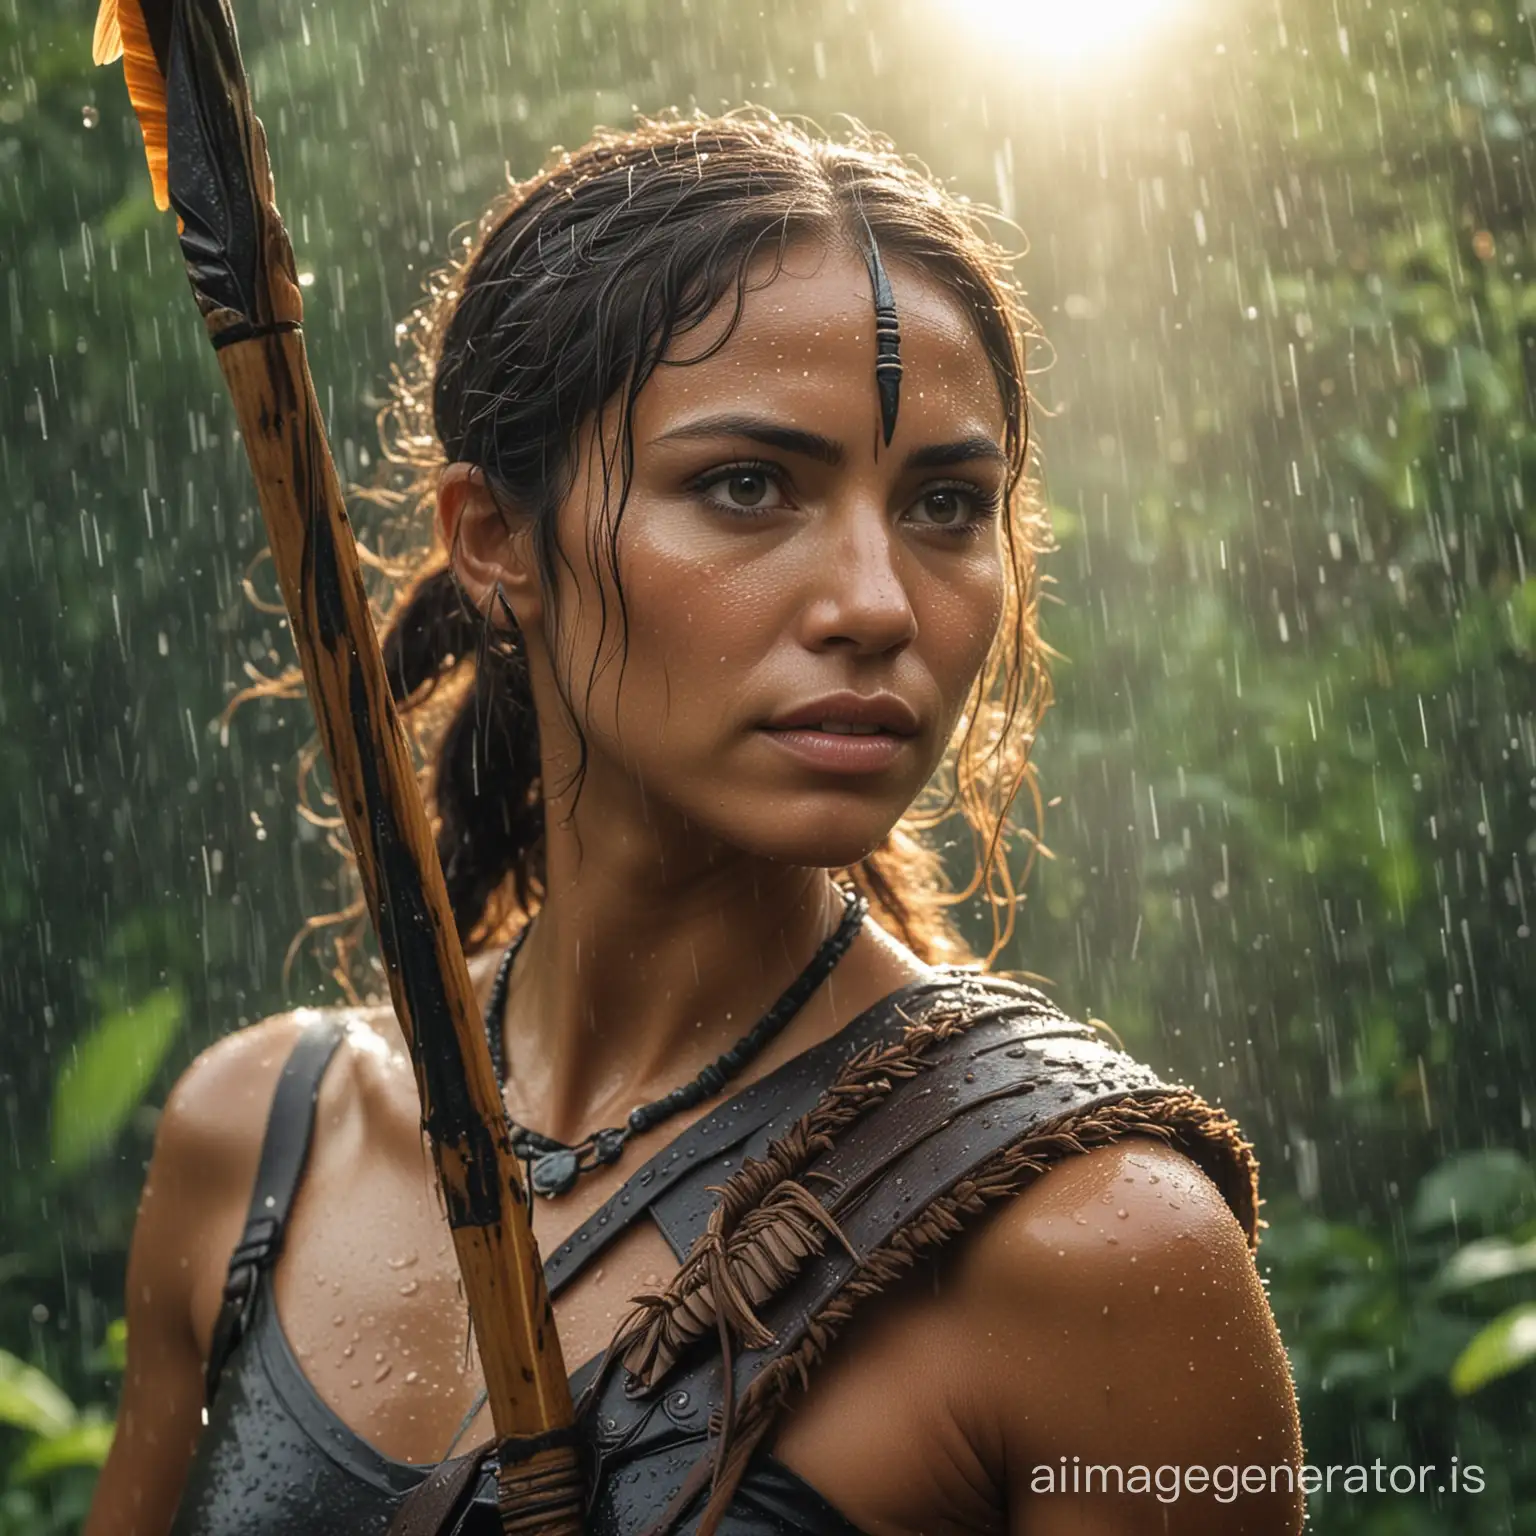 Amazon-Woman-Warrior-Holding-Spear-in-Lush-Rainforest